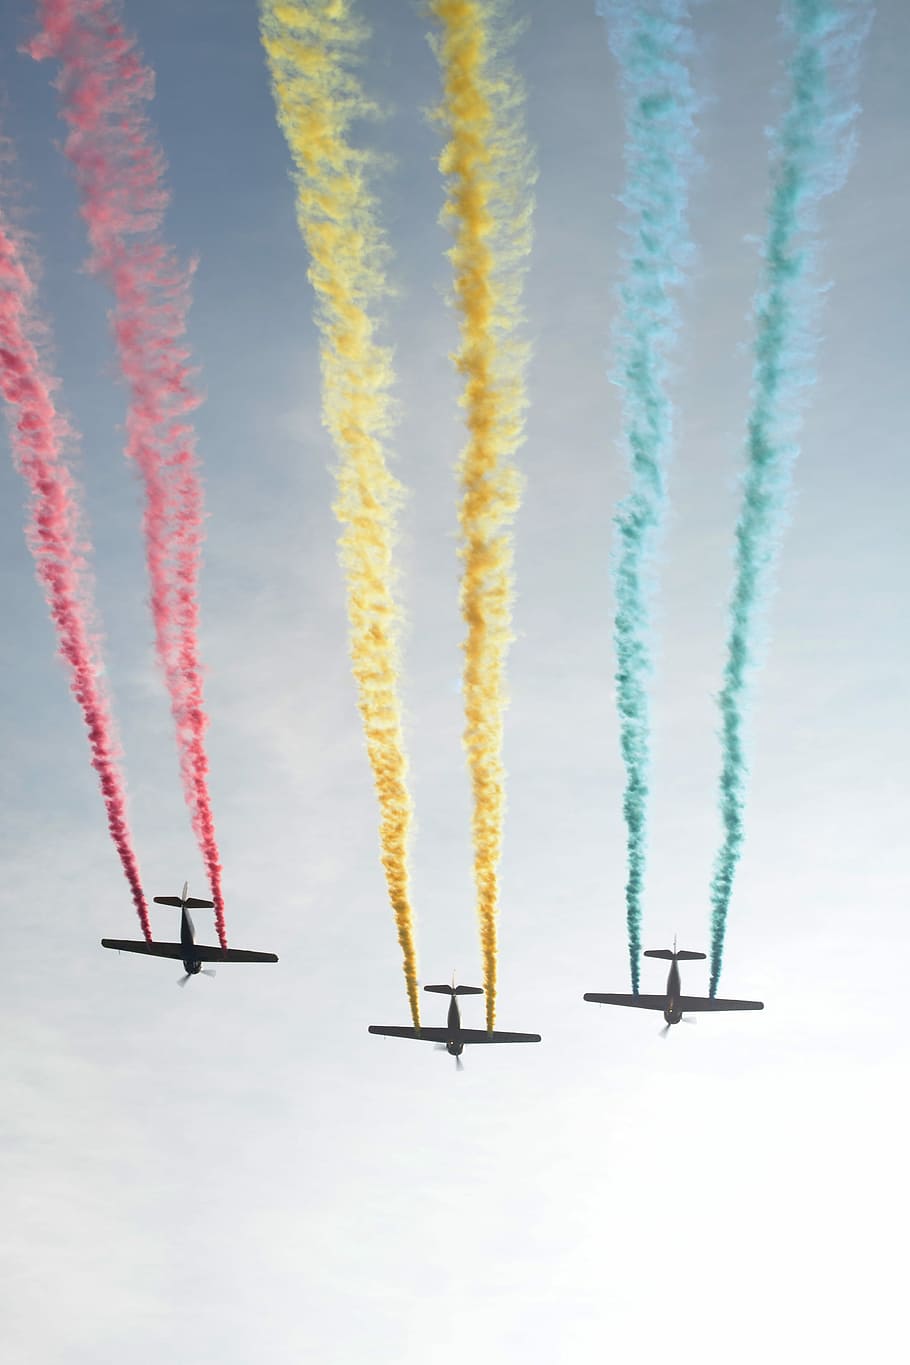 photograph of three plain releasing colorful smokes, three biplane spreading colored smokes